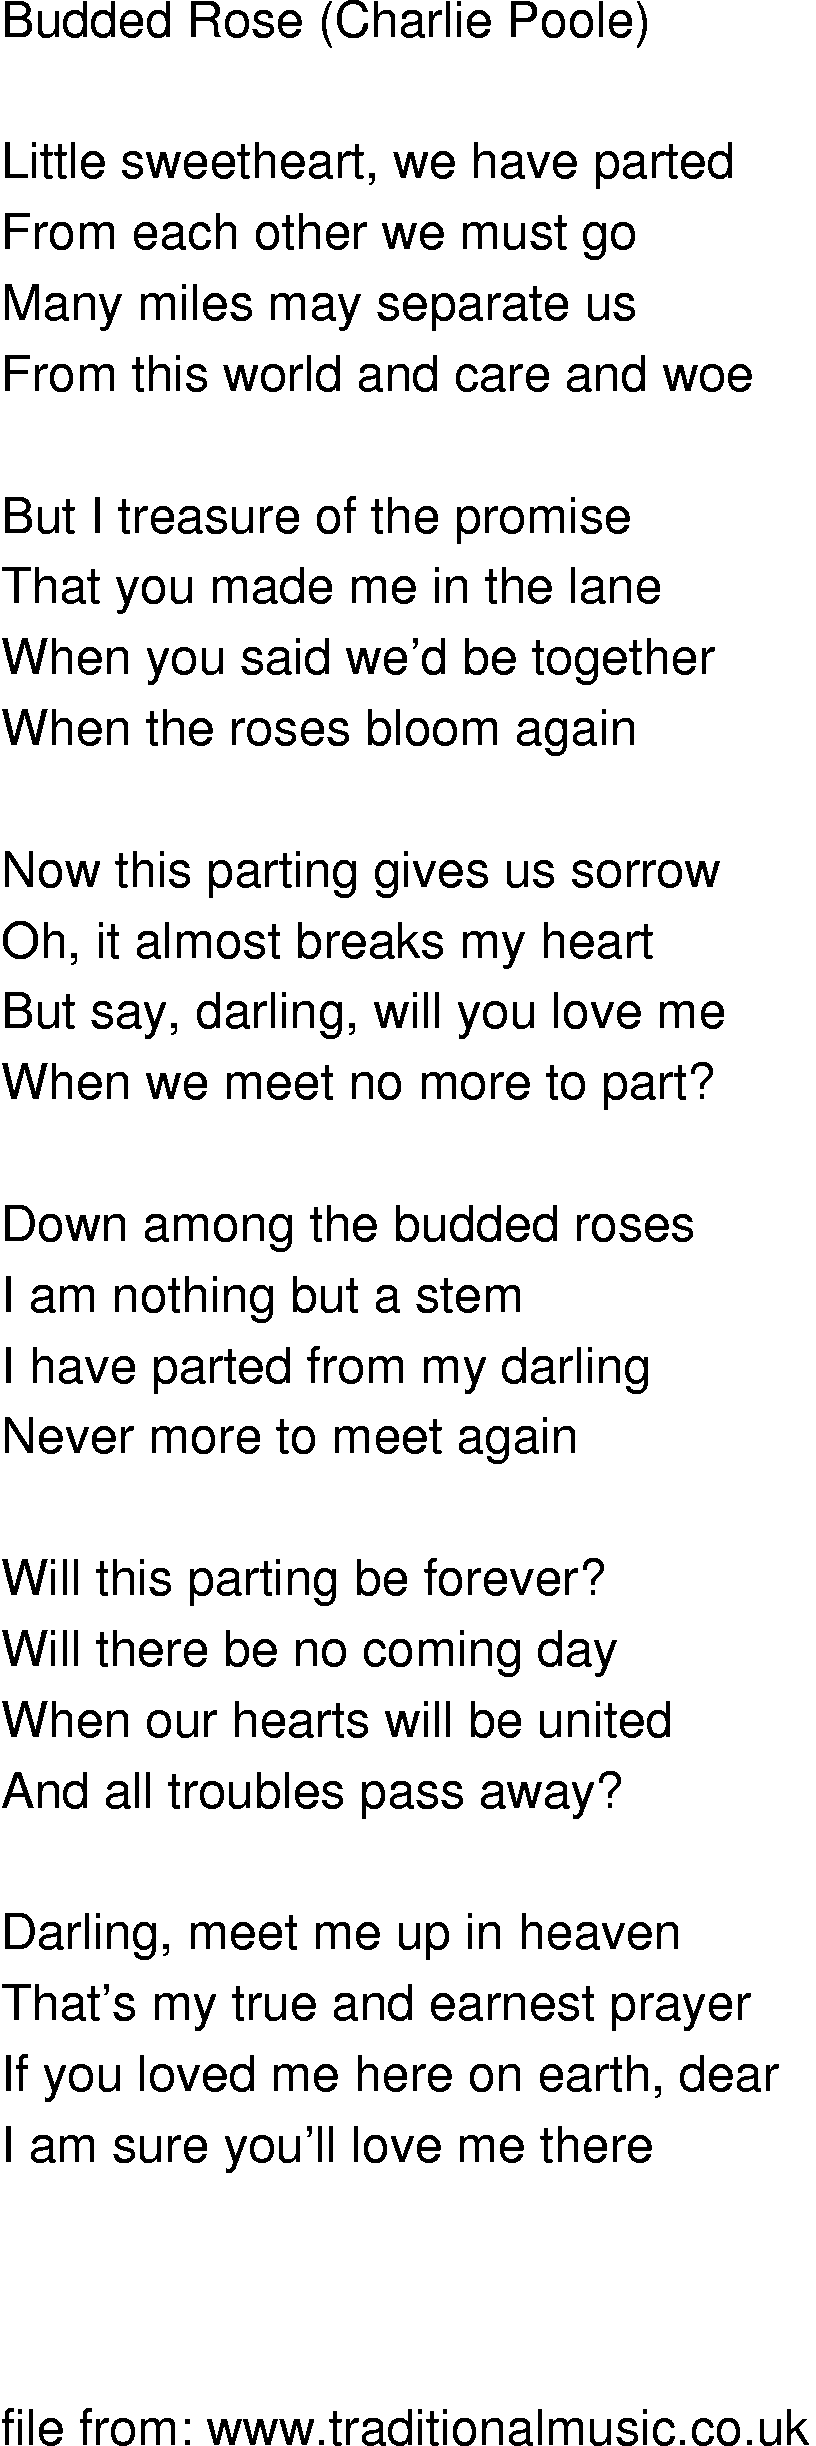 Old-Time (oldtimey) Song Lyrics - budded rose